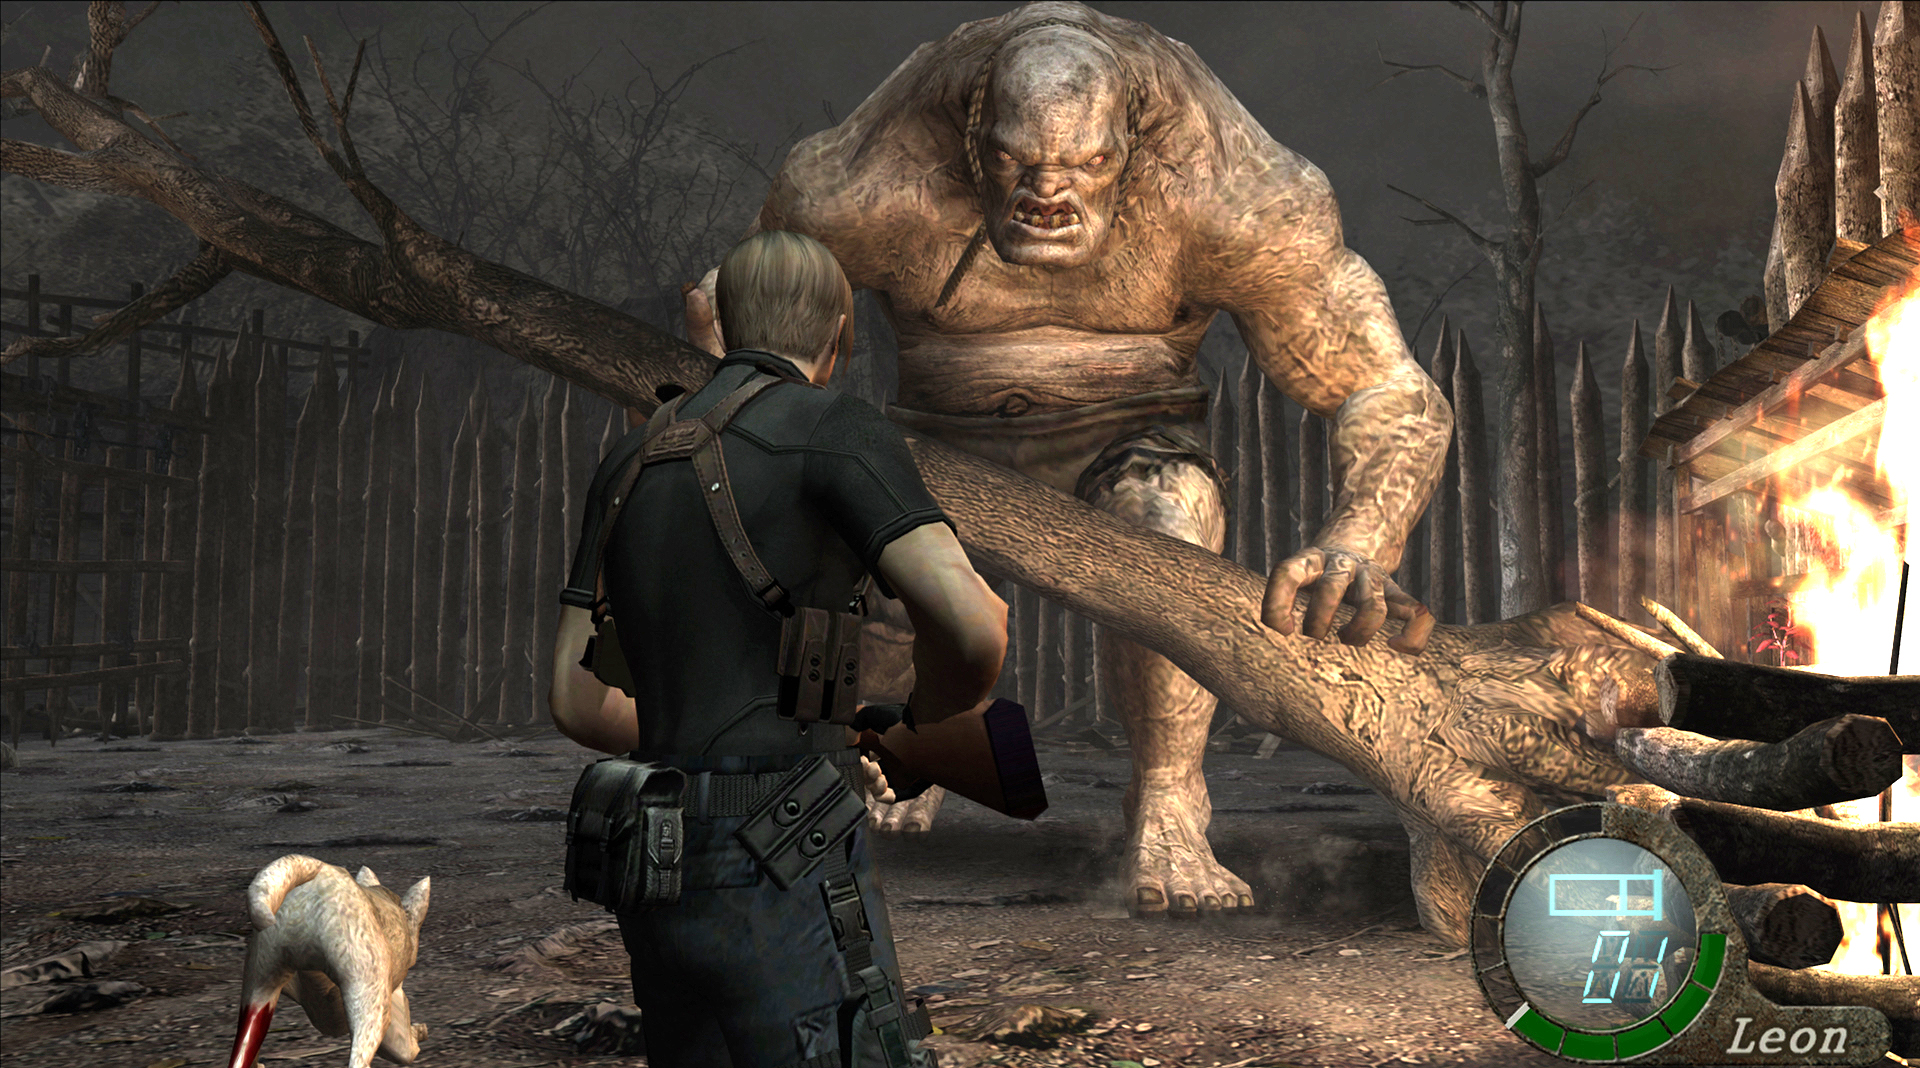 Resident Evil 4 PC (EMEA)